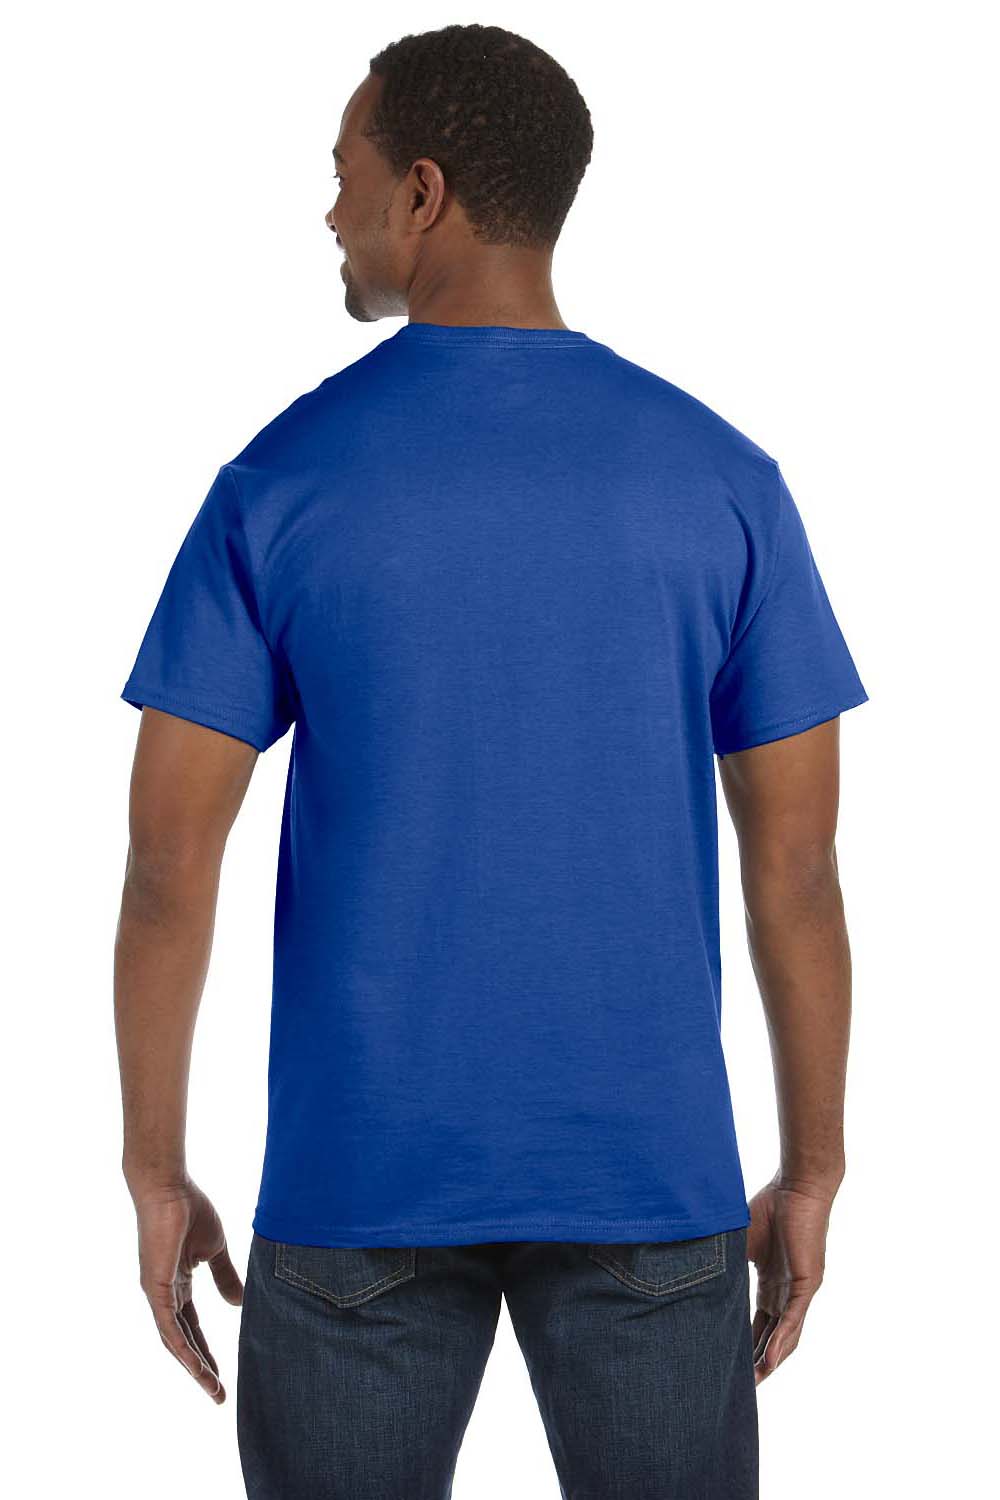 Hanes 5250T Mens ComfortSoft Short Sleeve Crewneck T-Shirt Royal Blue Back